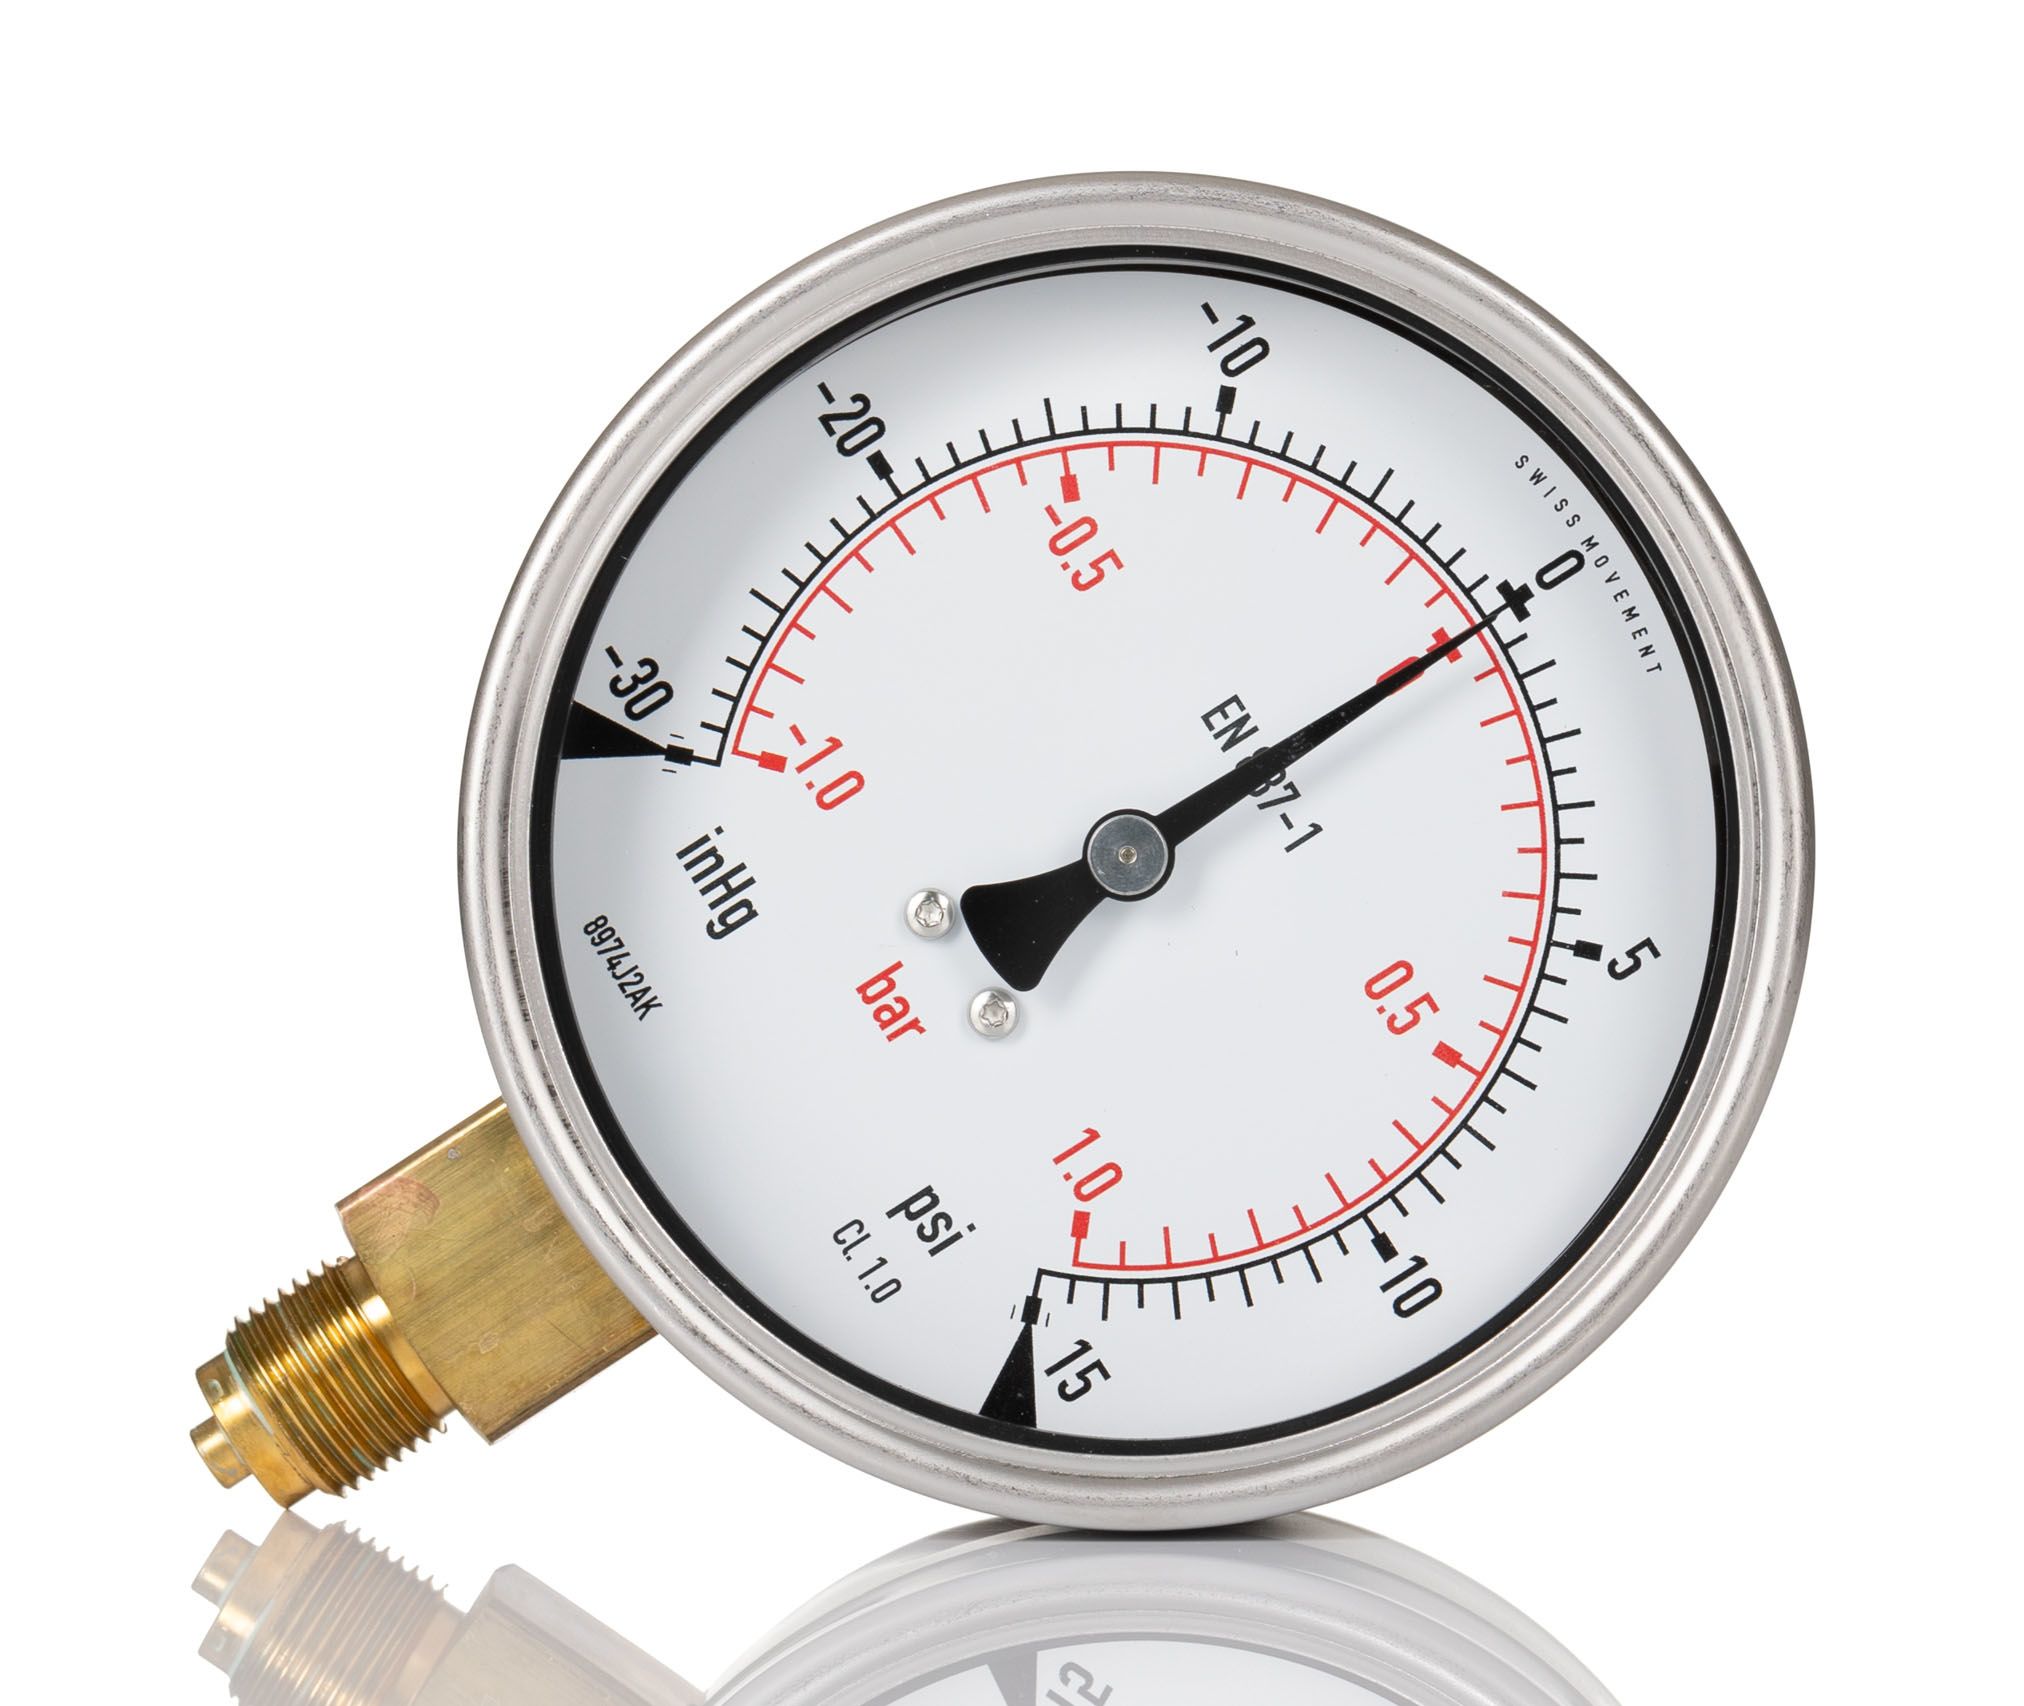 RS PRO G 3/8 Dial Pressure Gauge 1bar, UKAS, -1bar min.